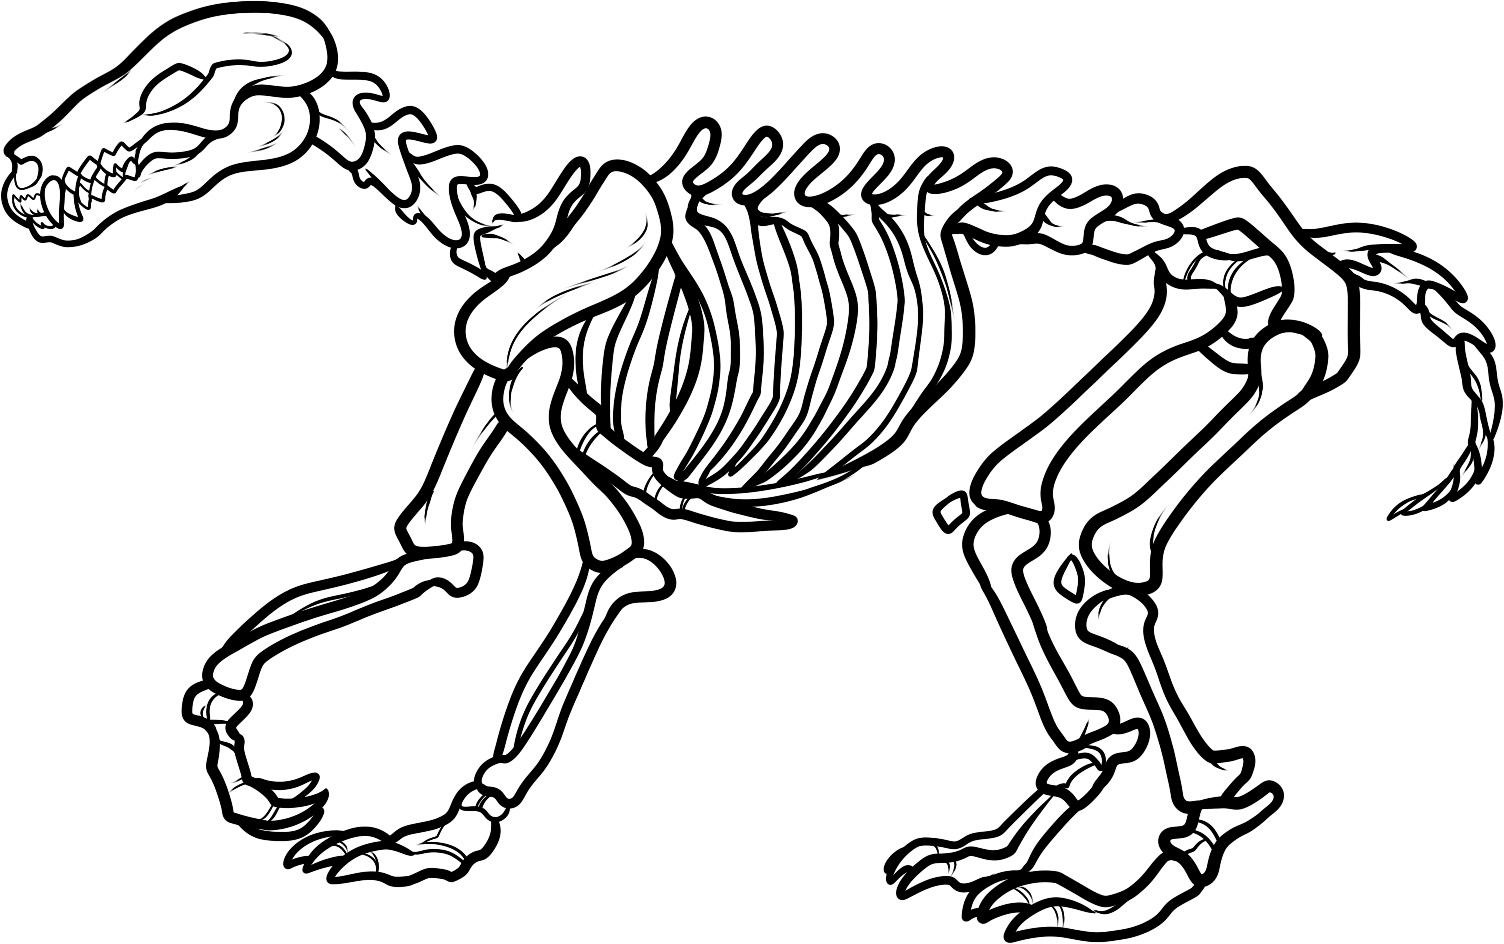 1540353960_dinosaur-skeleton-coloring-page